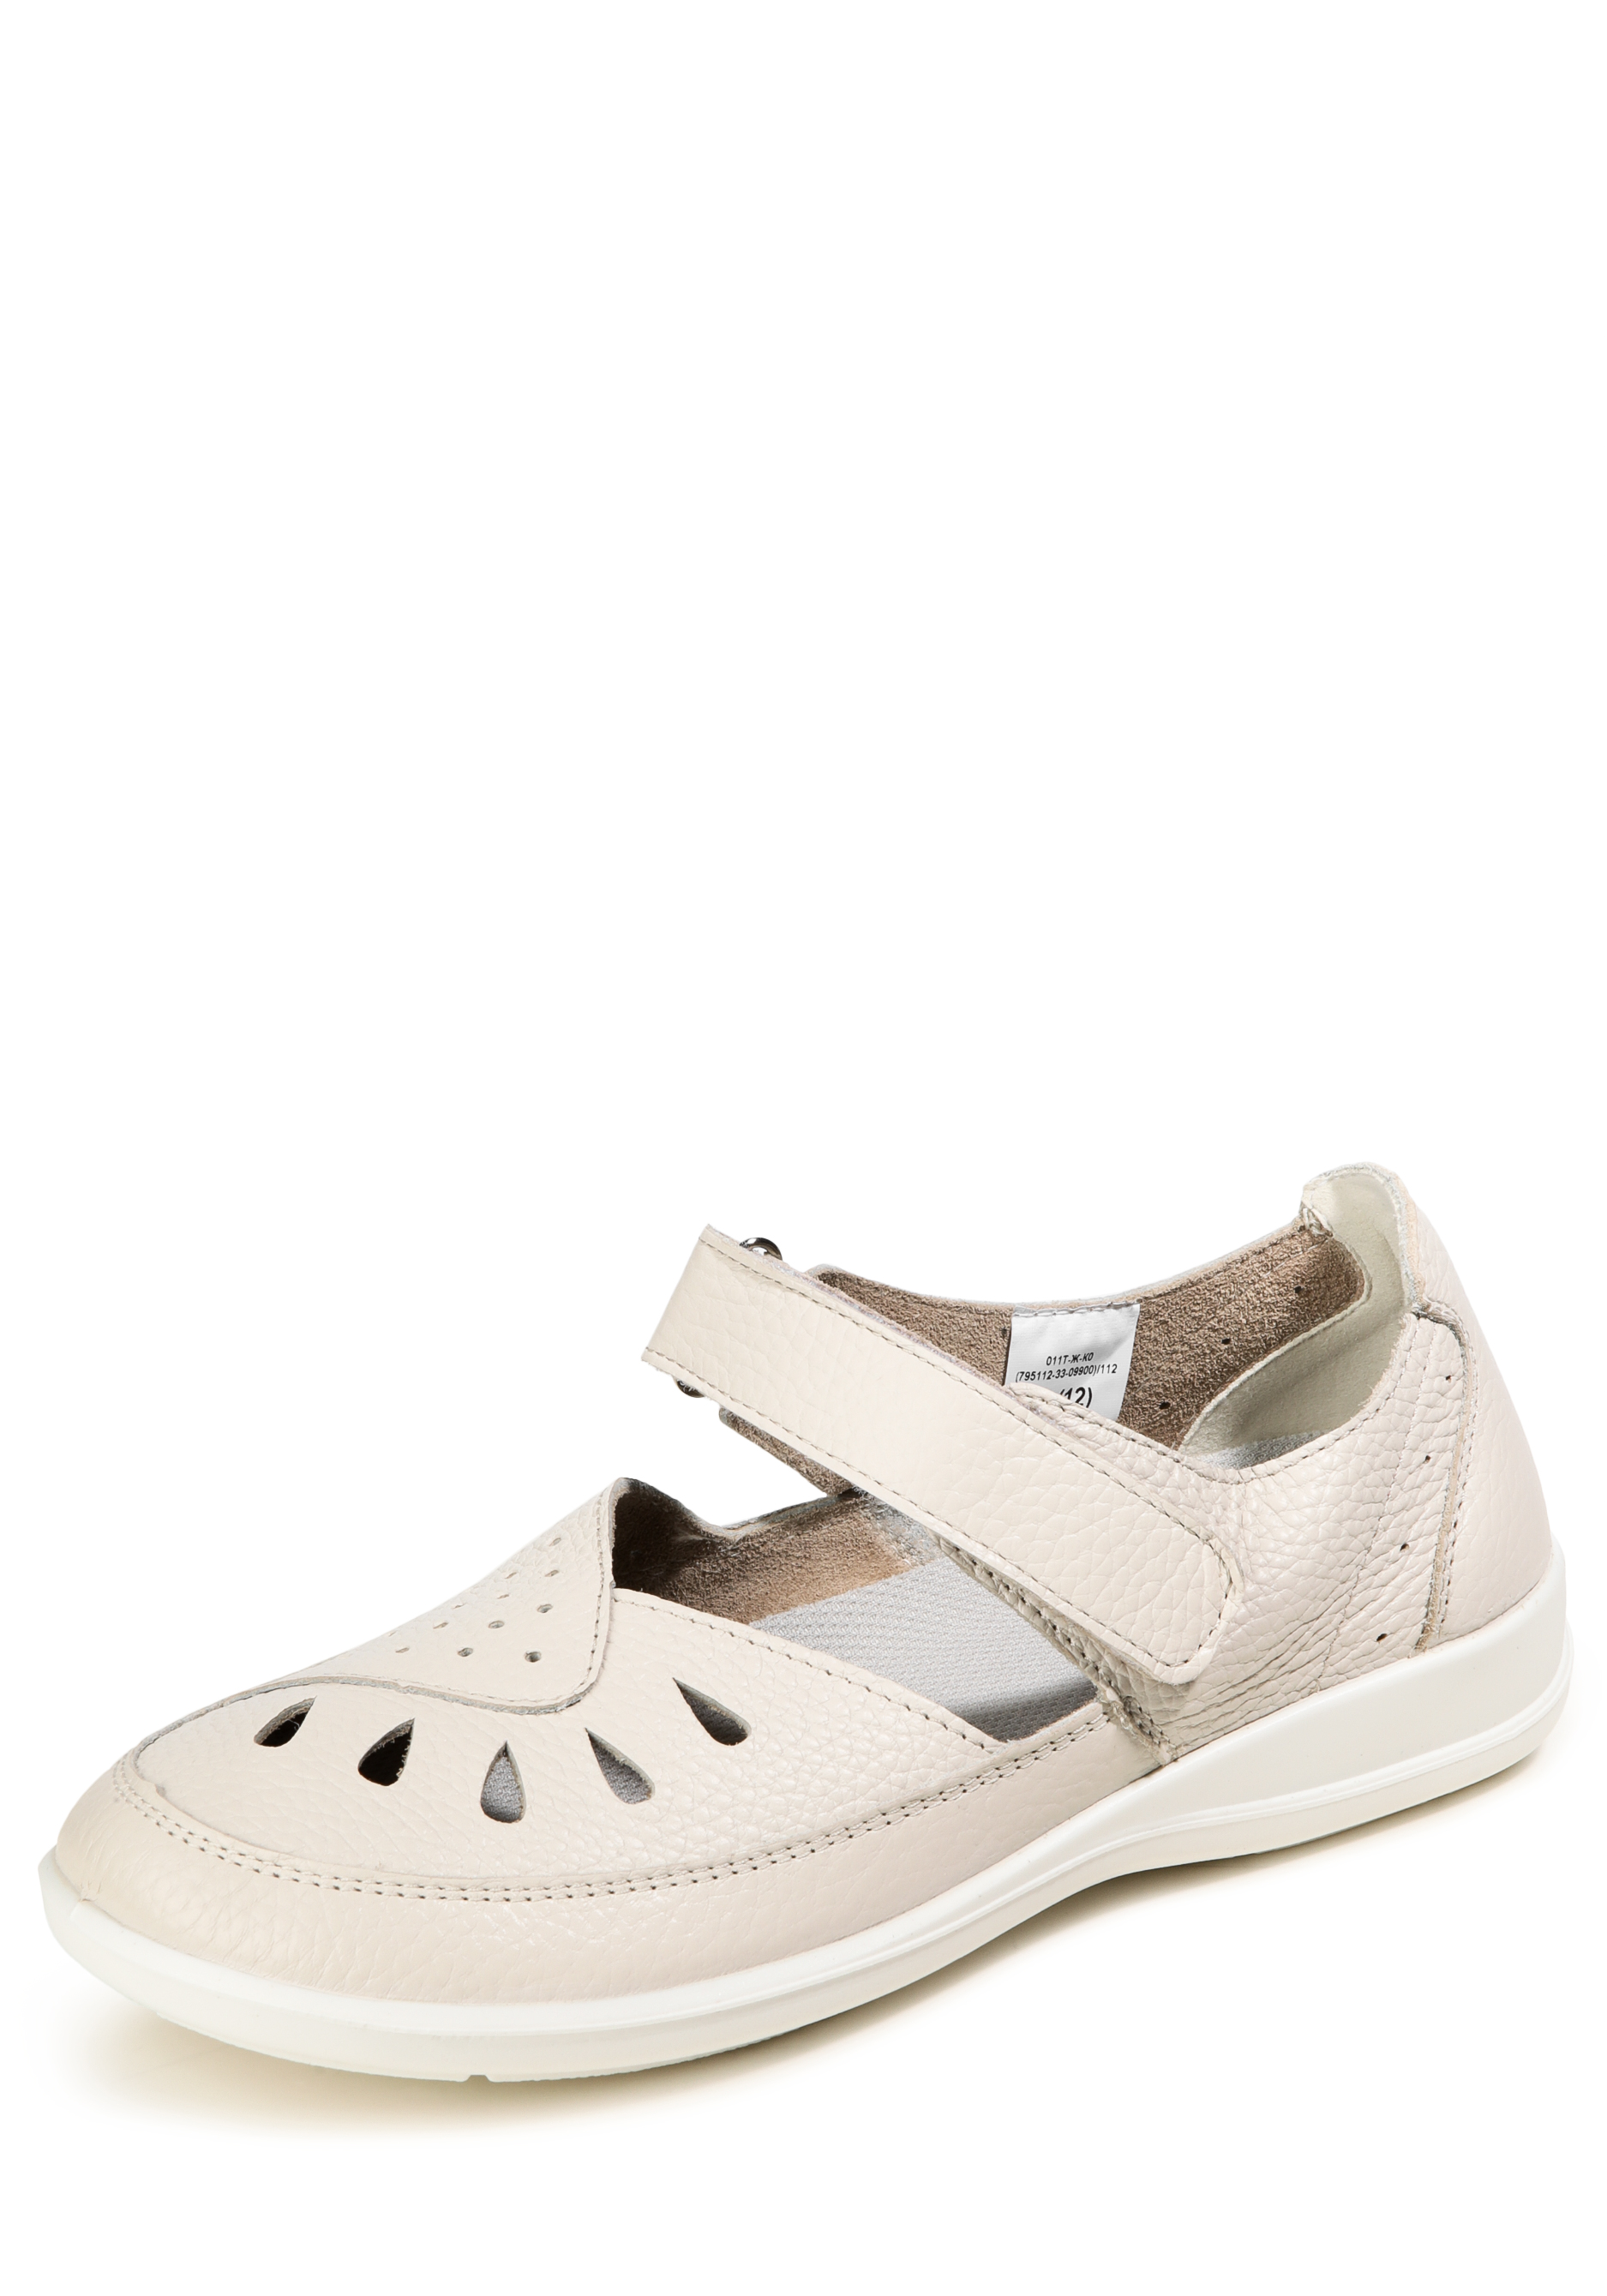 Туфли женские "Оливия" Germanika, размер 37, цвет белый